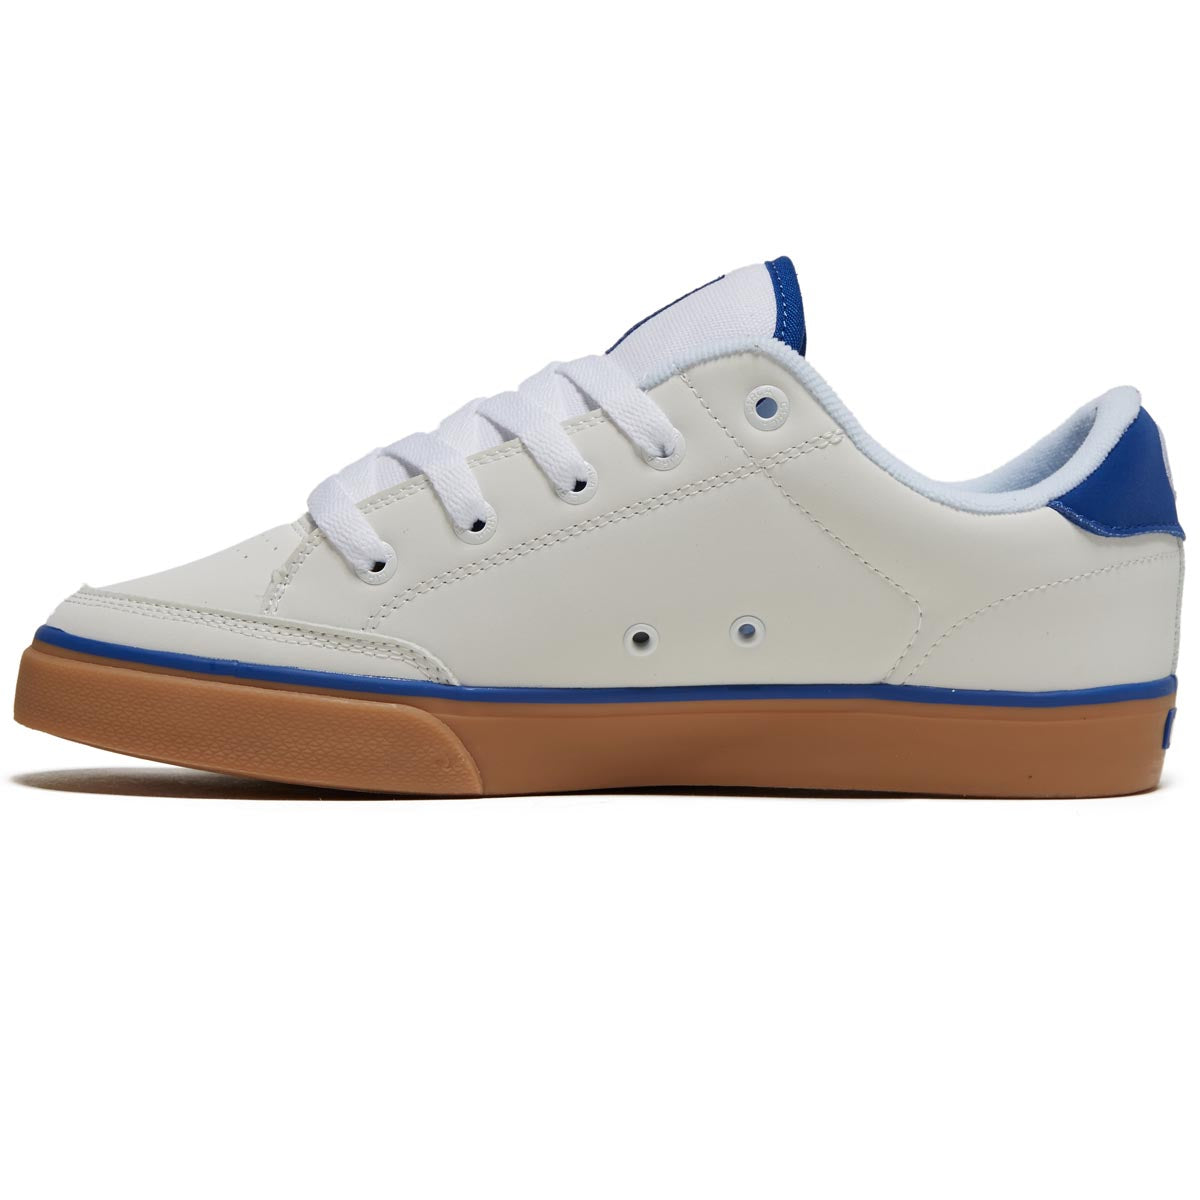 C1rca Buckler SK Shoes - White/Royal Blue image 2